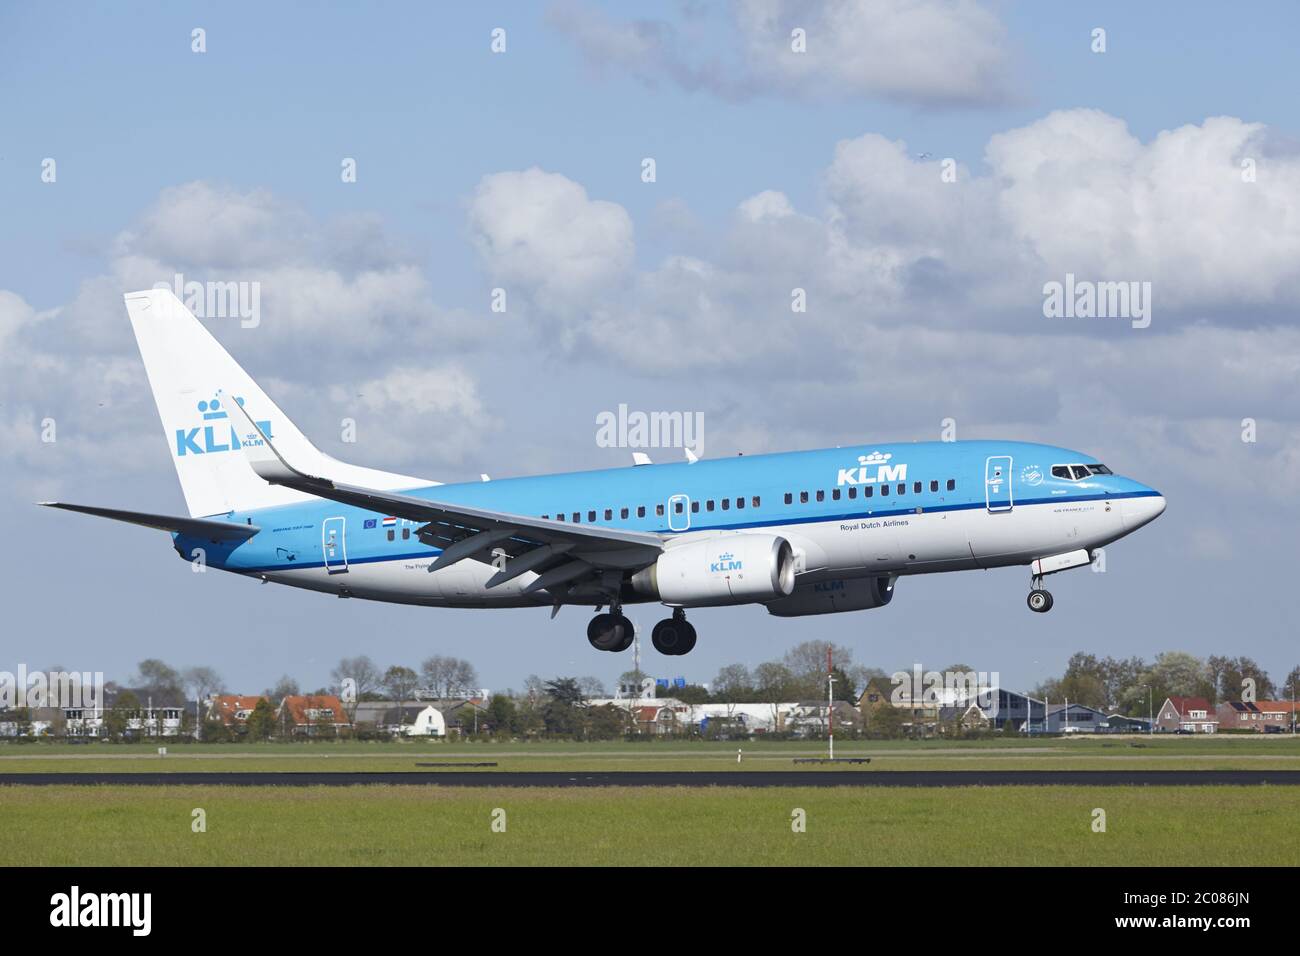 Aeroporto Flughafen Amsterdam Schiphol - Boeing 737 del KLM Landset Foto Stock